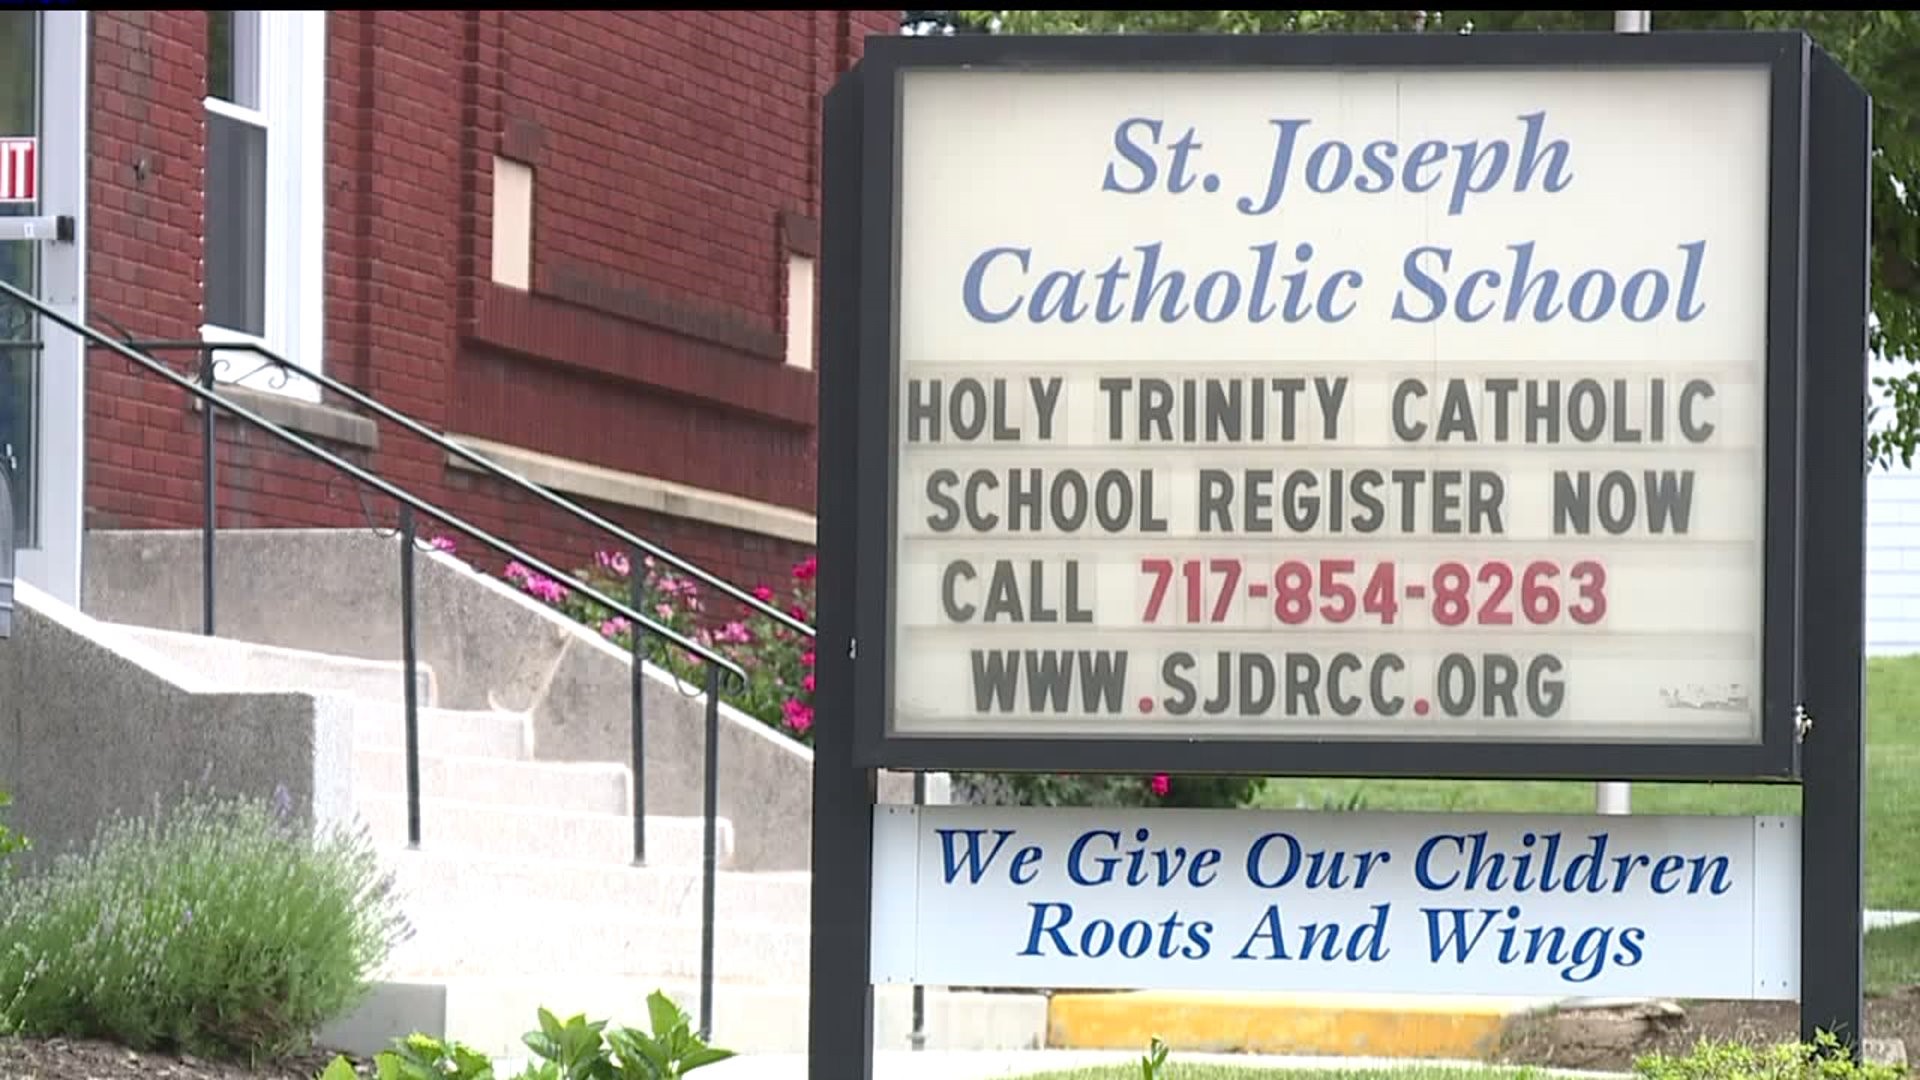 St Joseph school in Dallastown hosts open house one week before closure